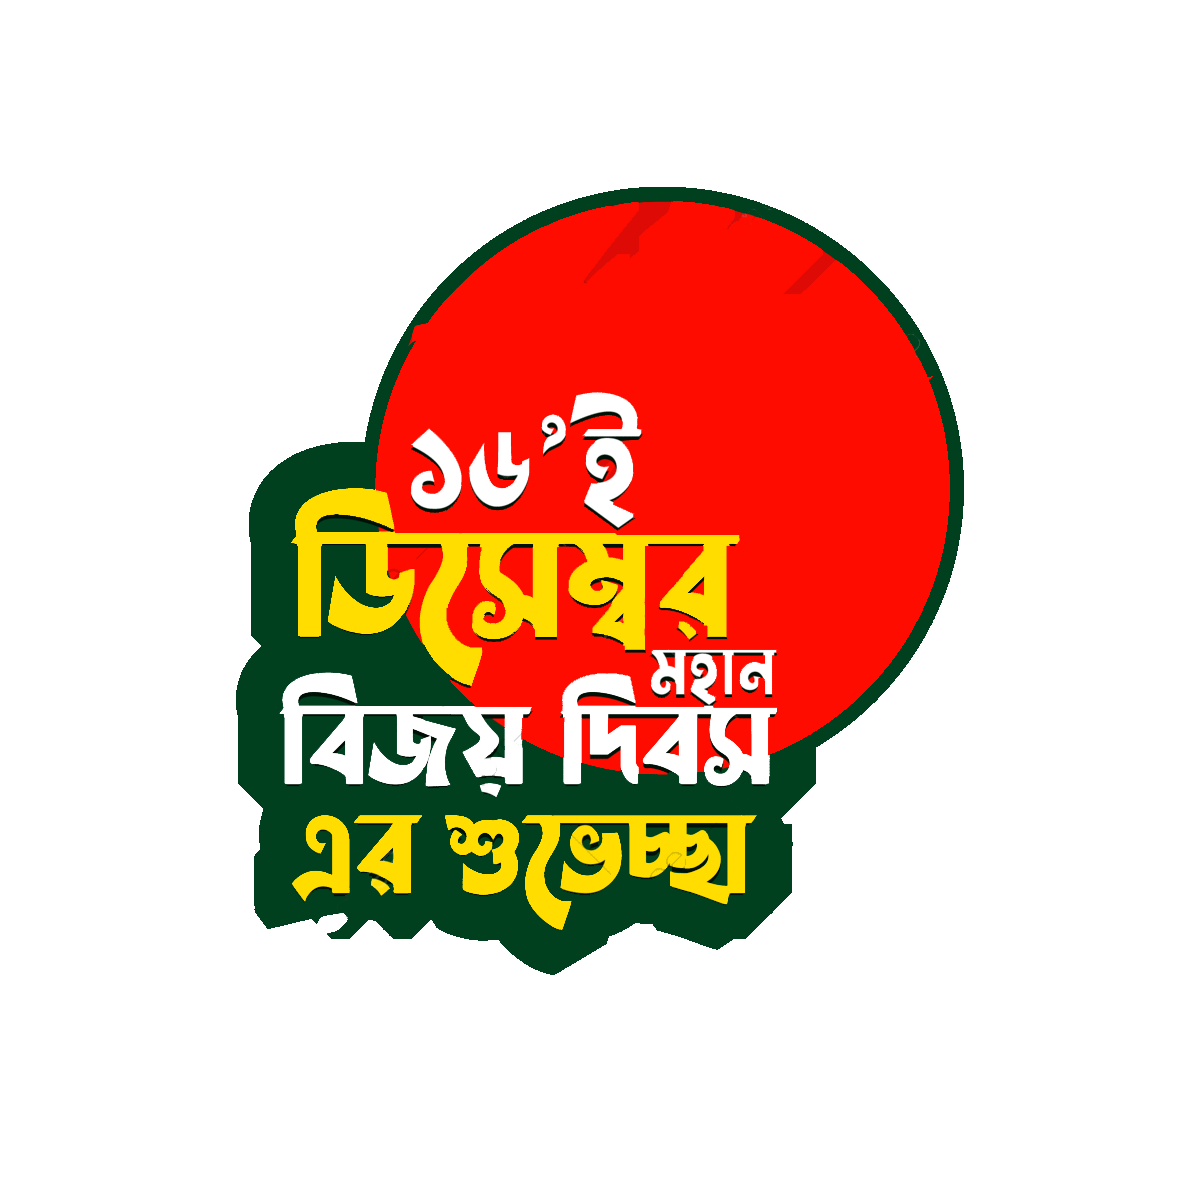 16 december bangladesh victory day png image